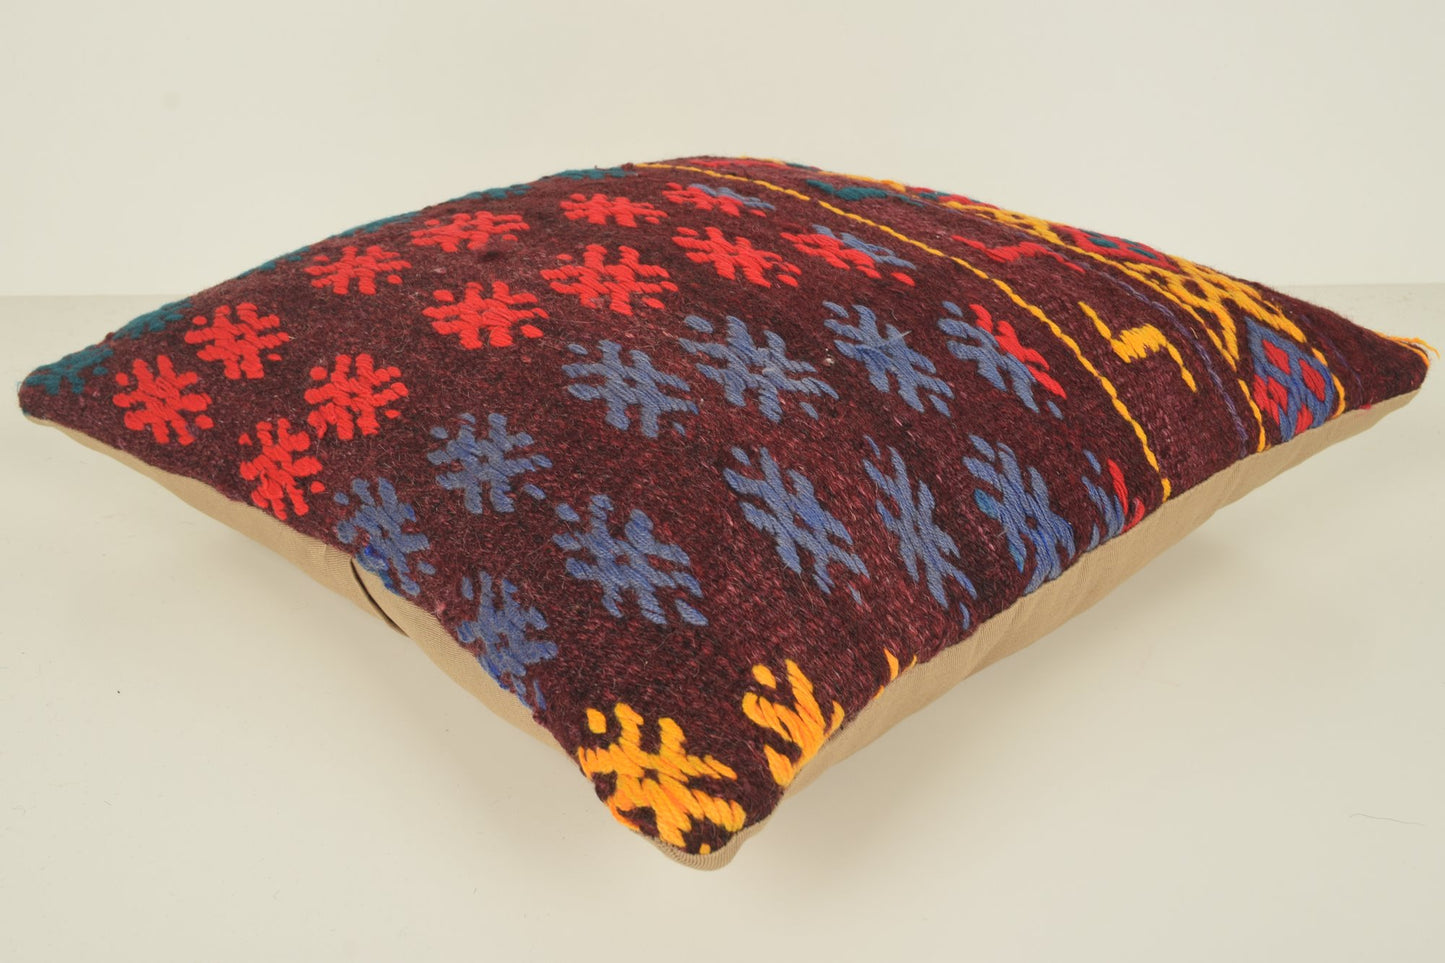 Turkish Cushions Perth C01387 18x18 Regional Rustic Wool